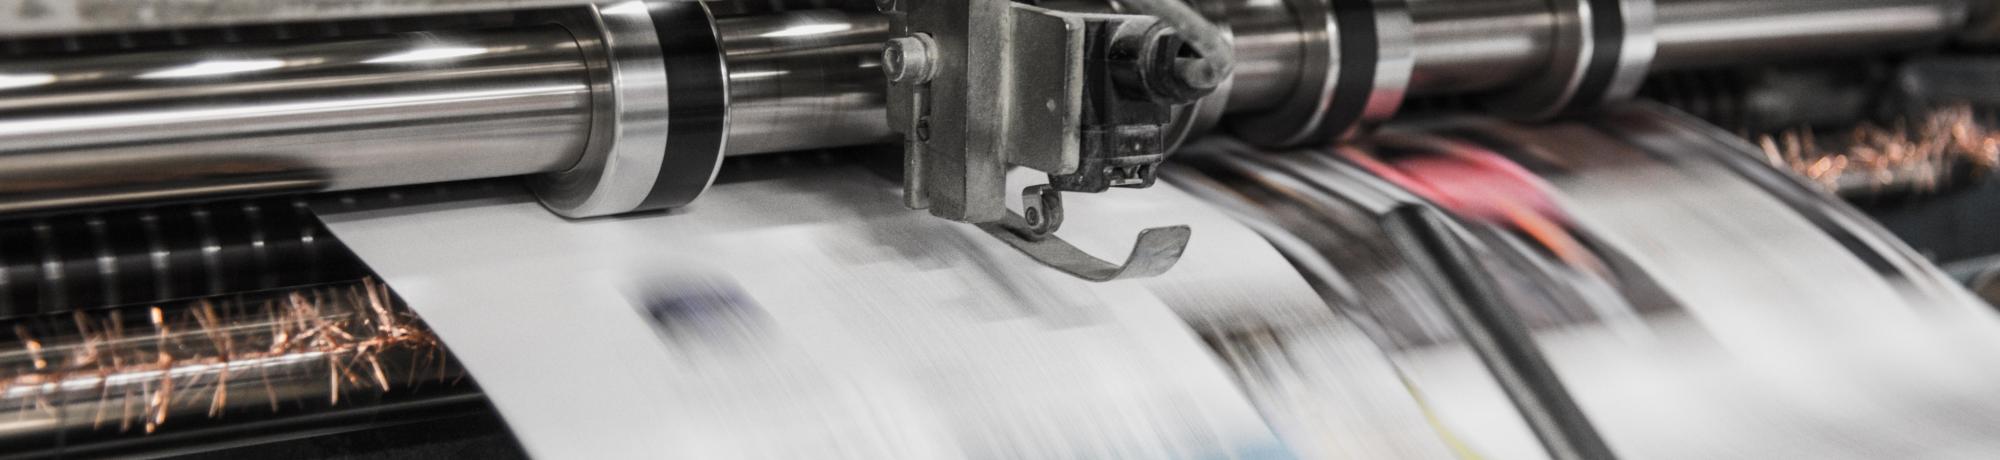 A printing press